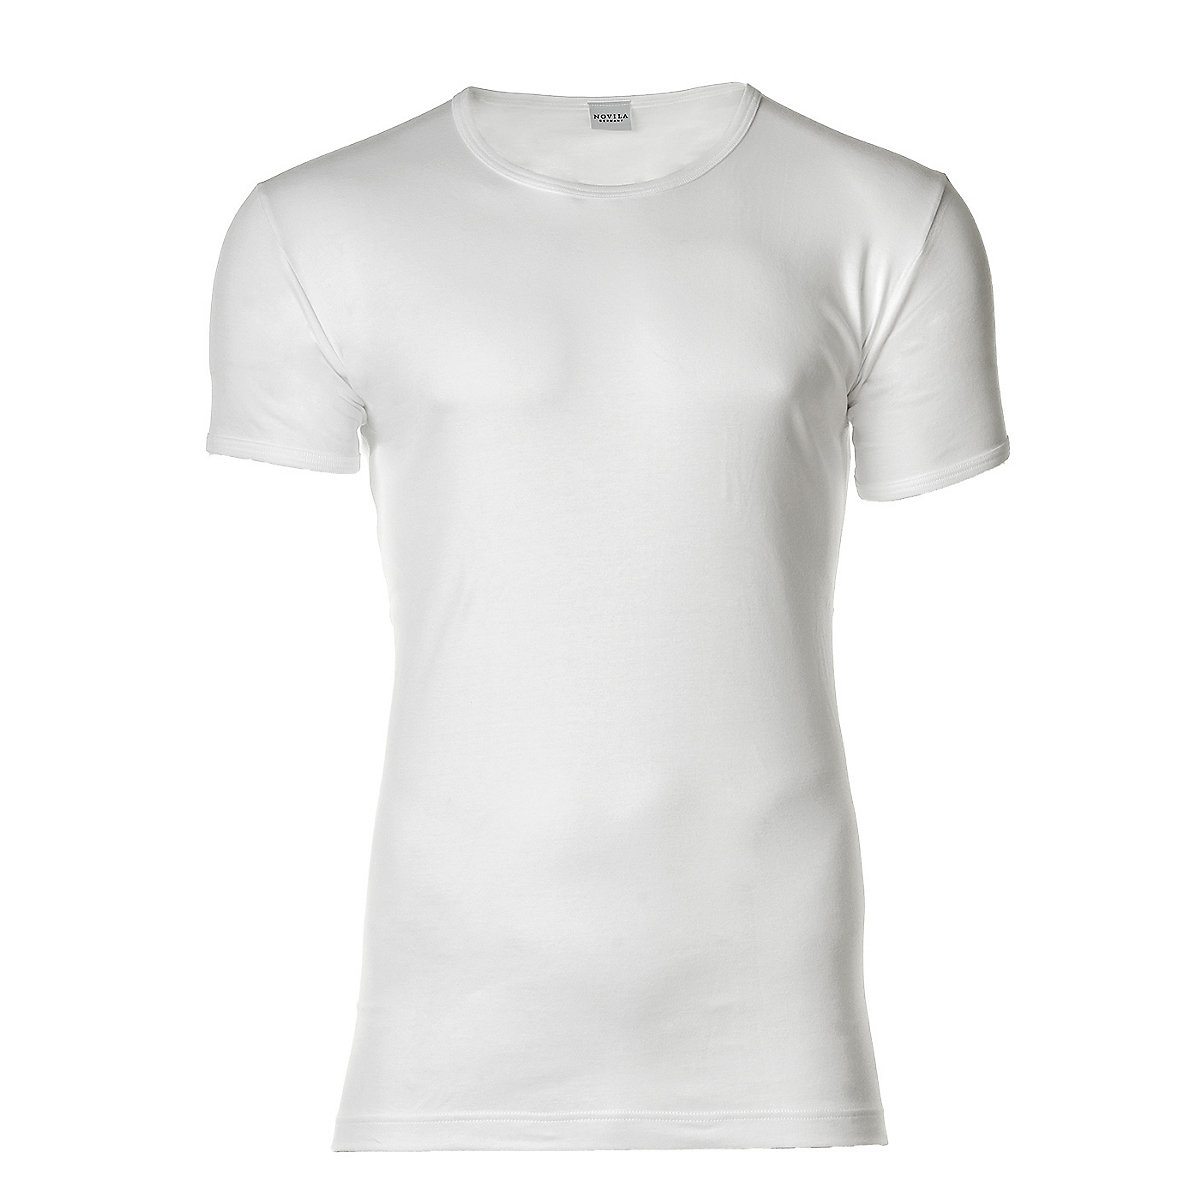 NOVILA Herren T-Shirt Rundhals Natural Comfort Feininterlock T-Shirts weiß